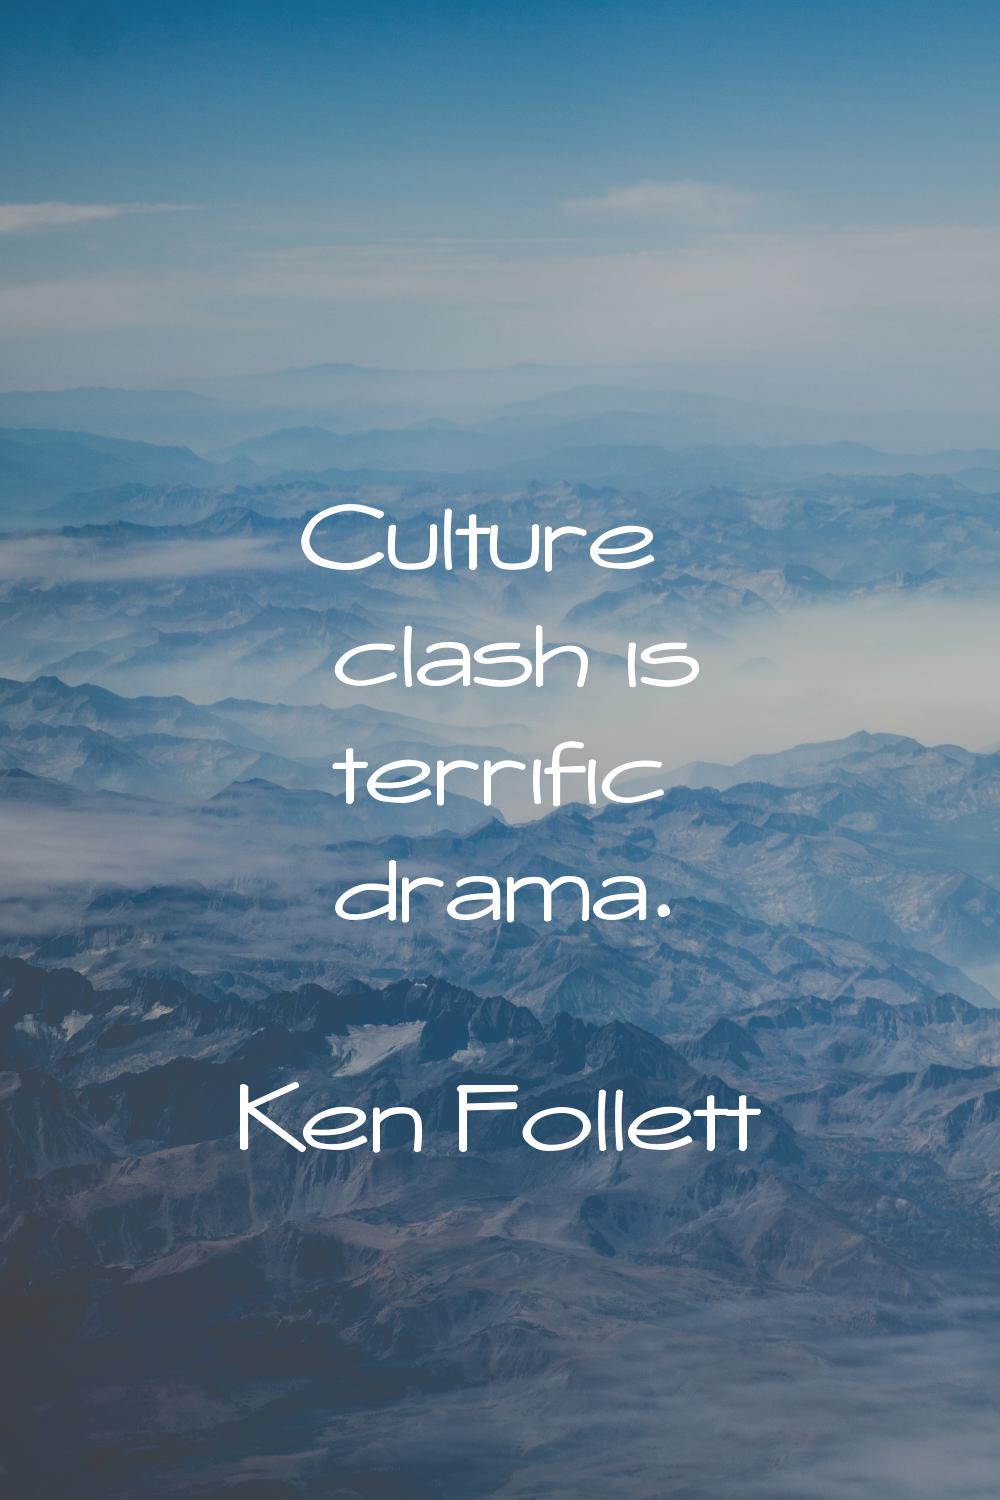 Culture clash is terrific drama.